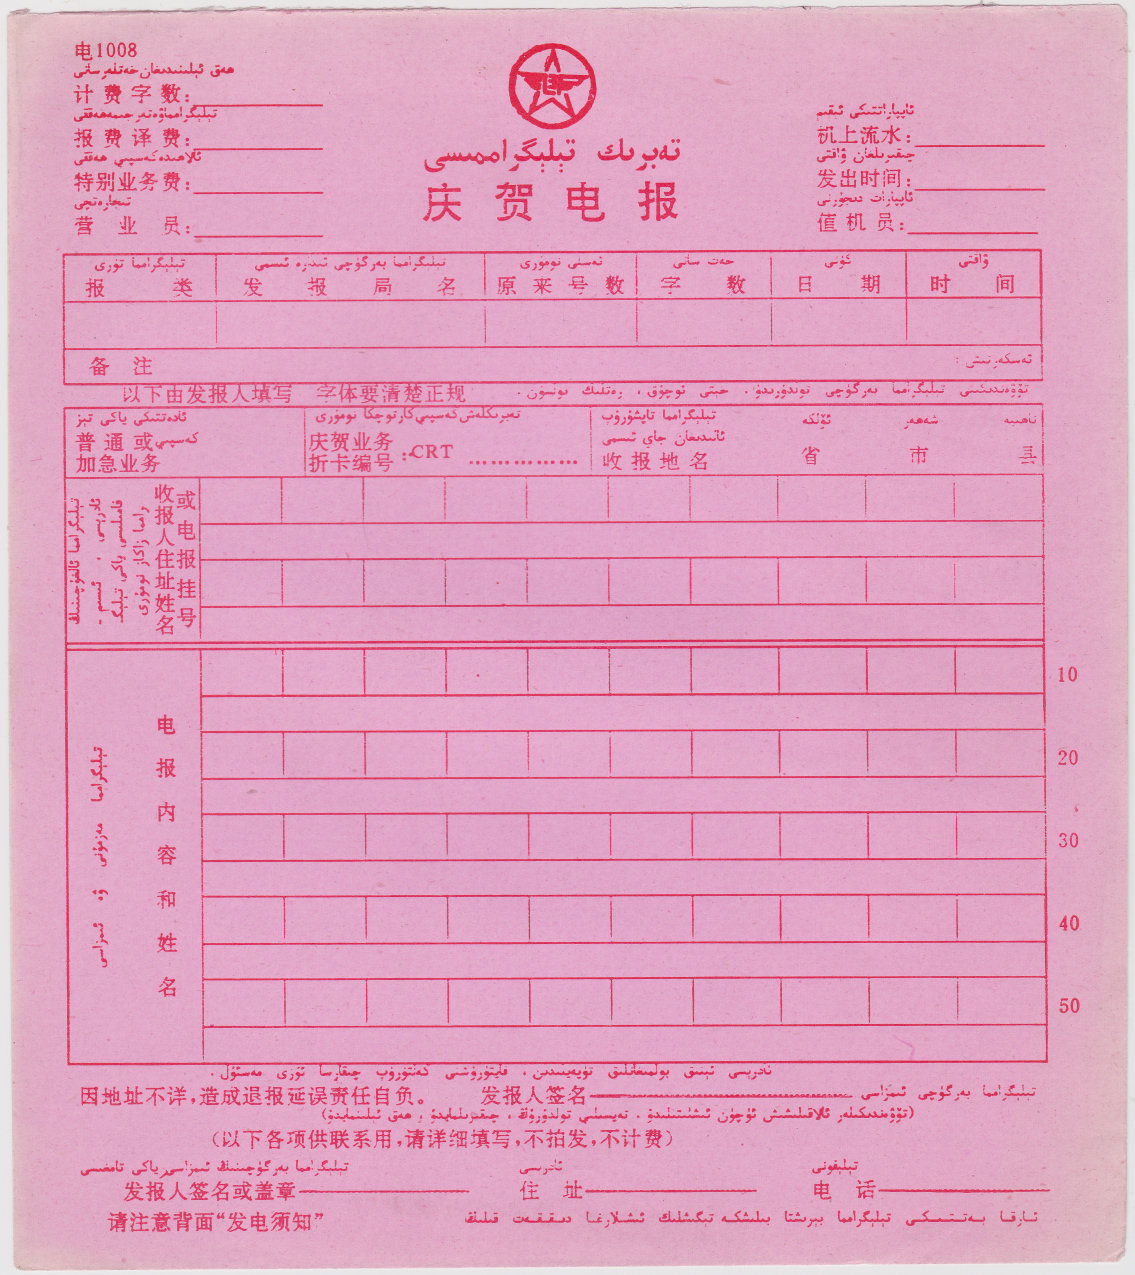 Xinjiang form 1008 - front